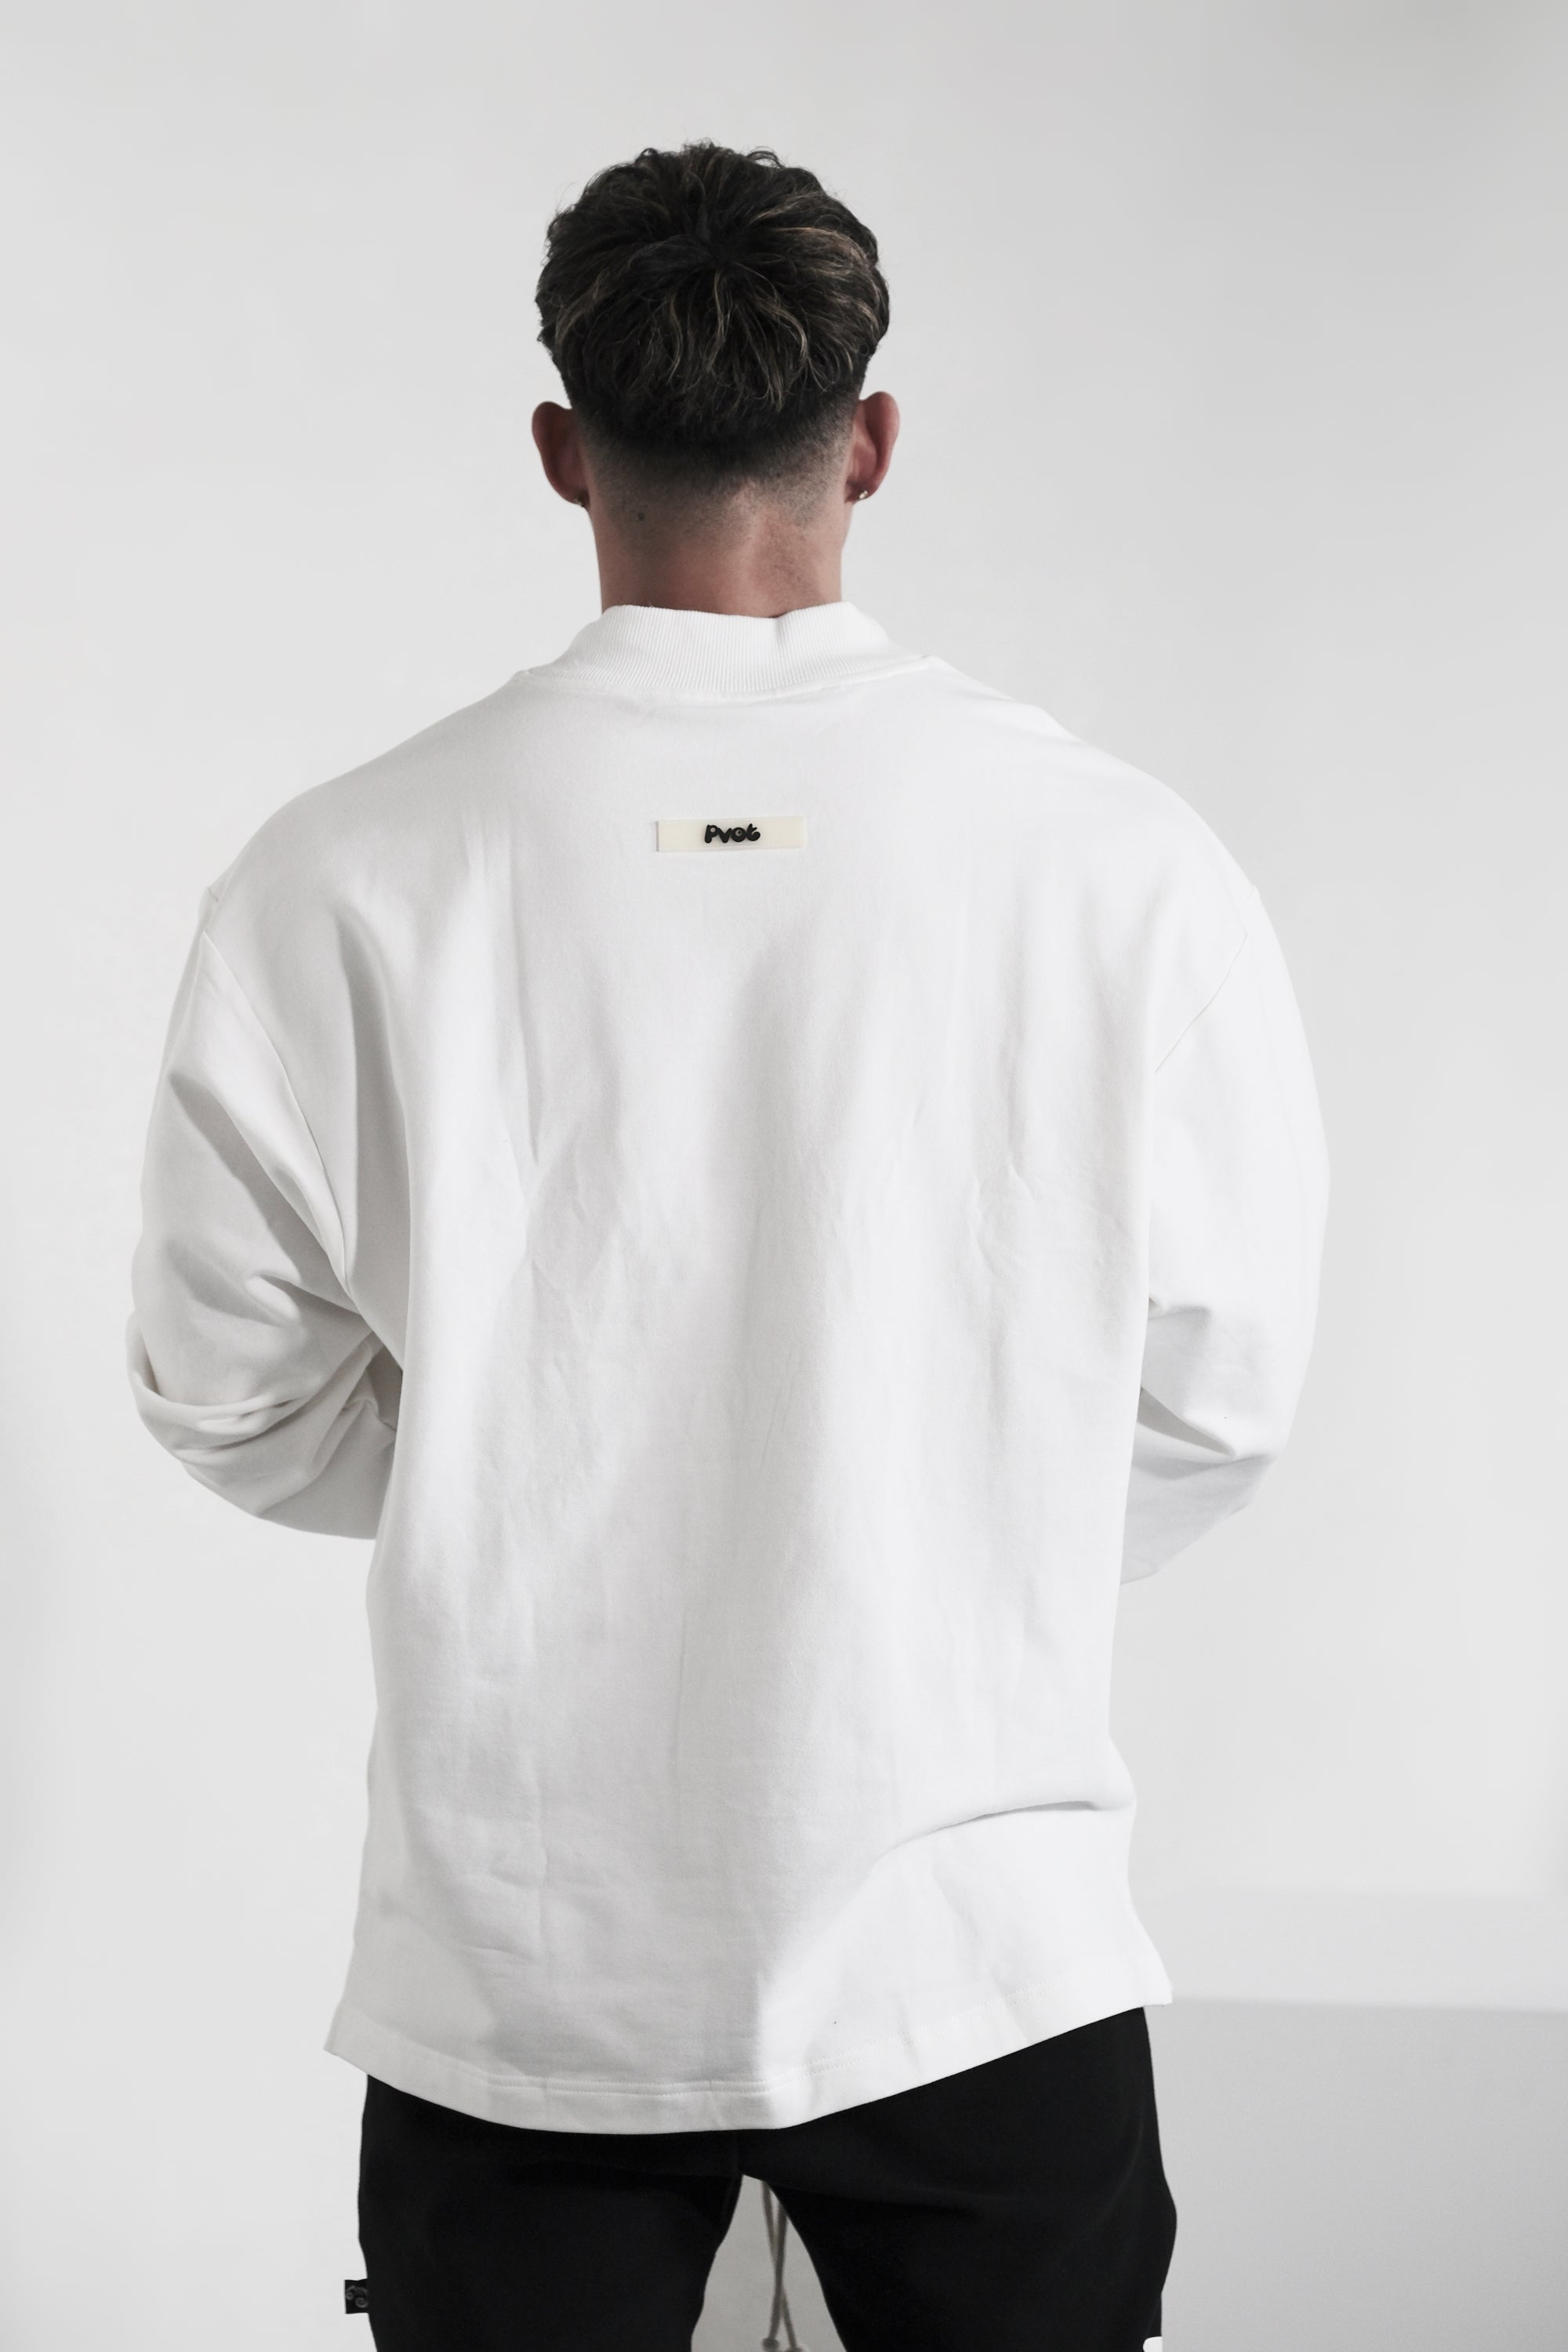 Pvot Mock Neck Long Sleeve T-Shirts (White)